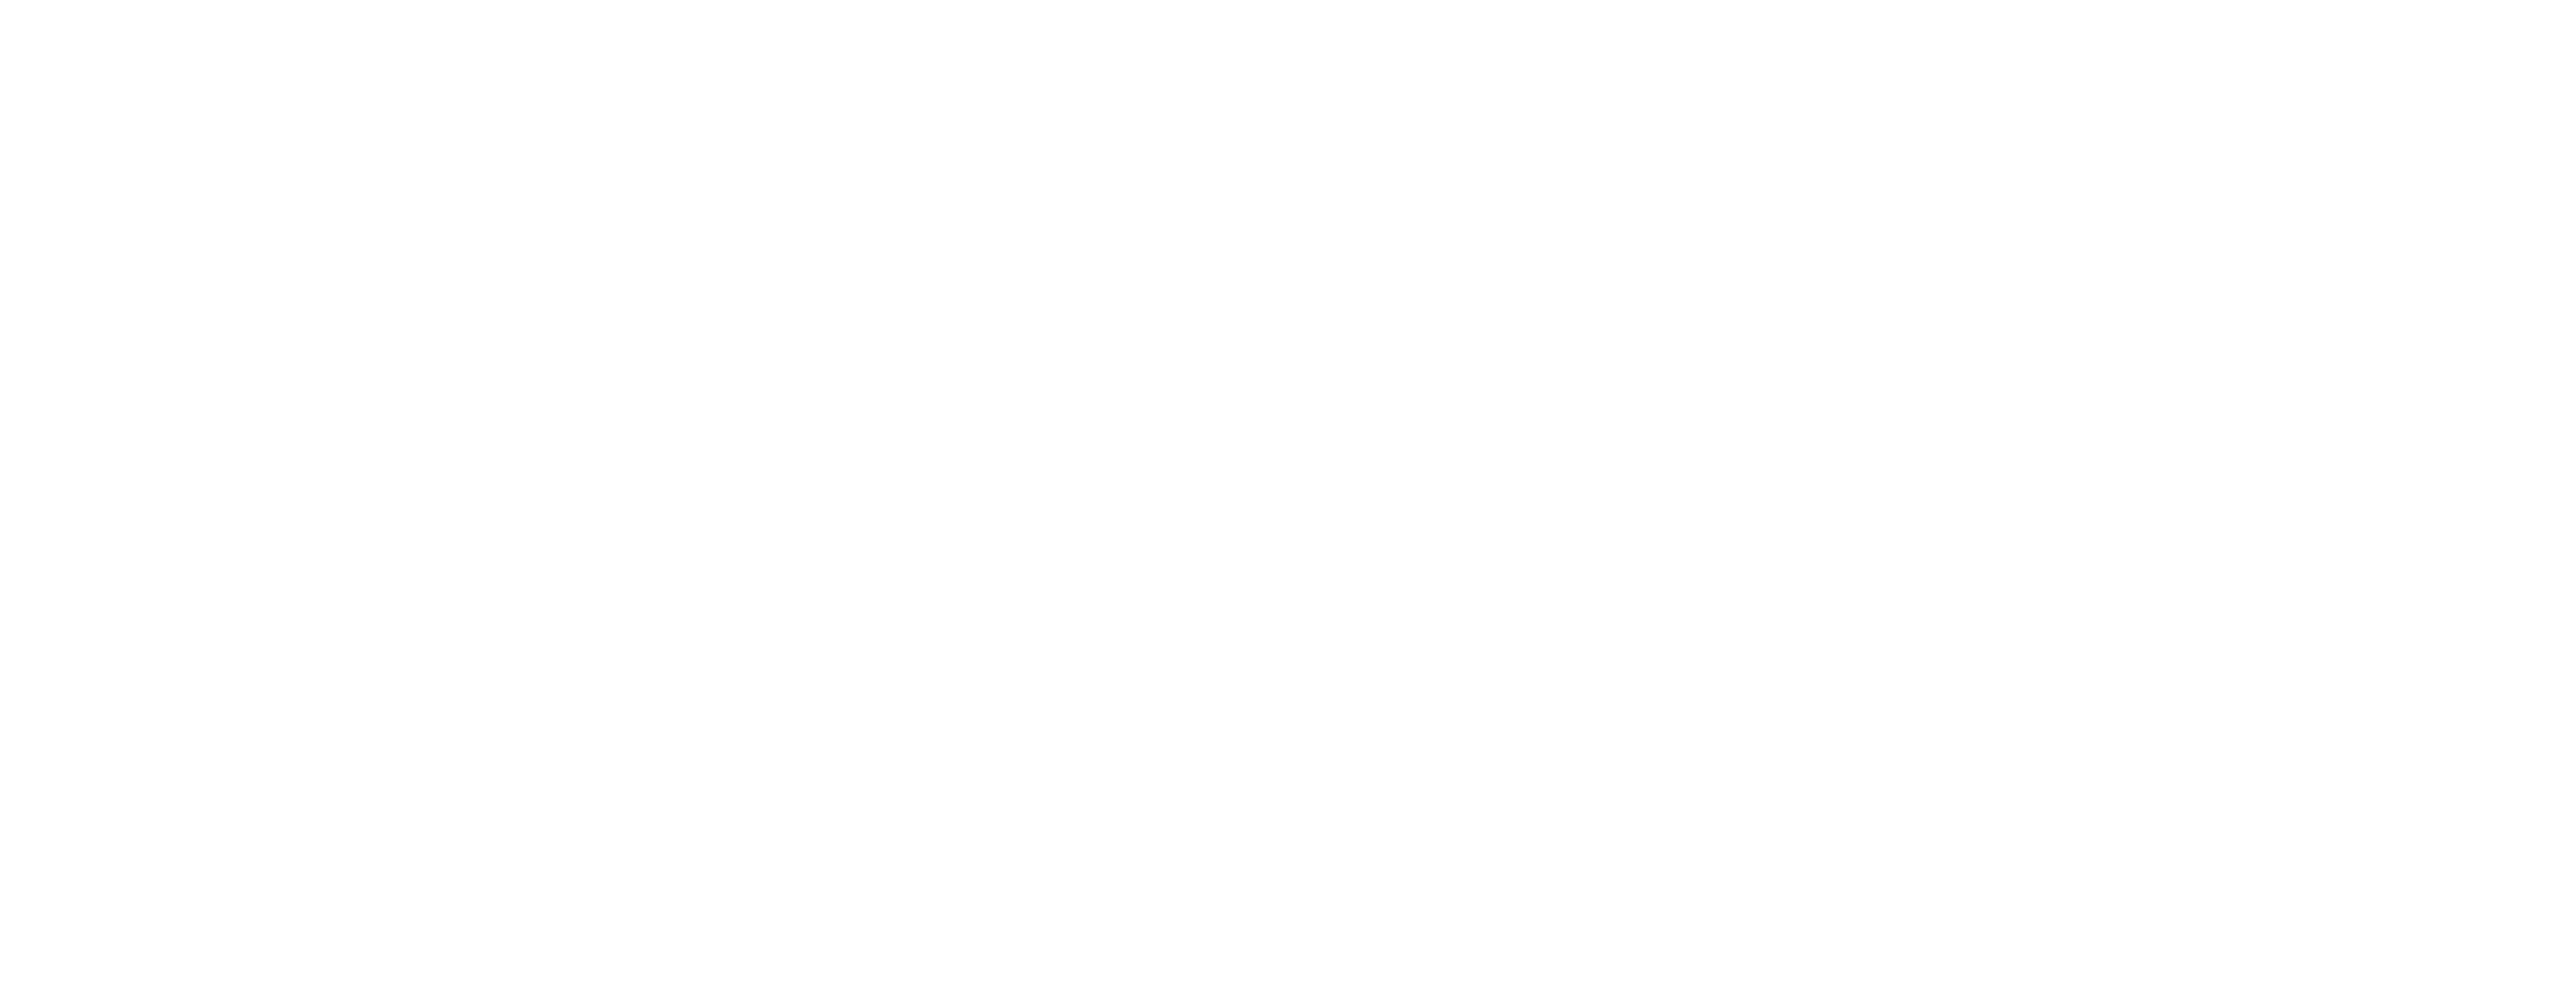 AHIA logo